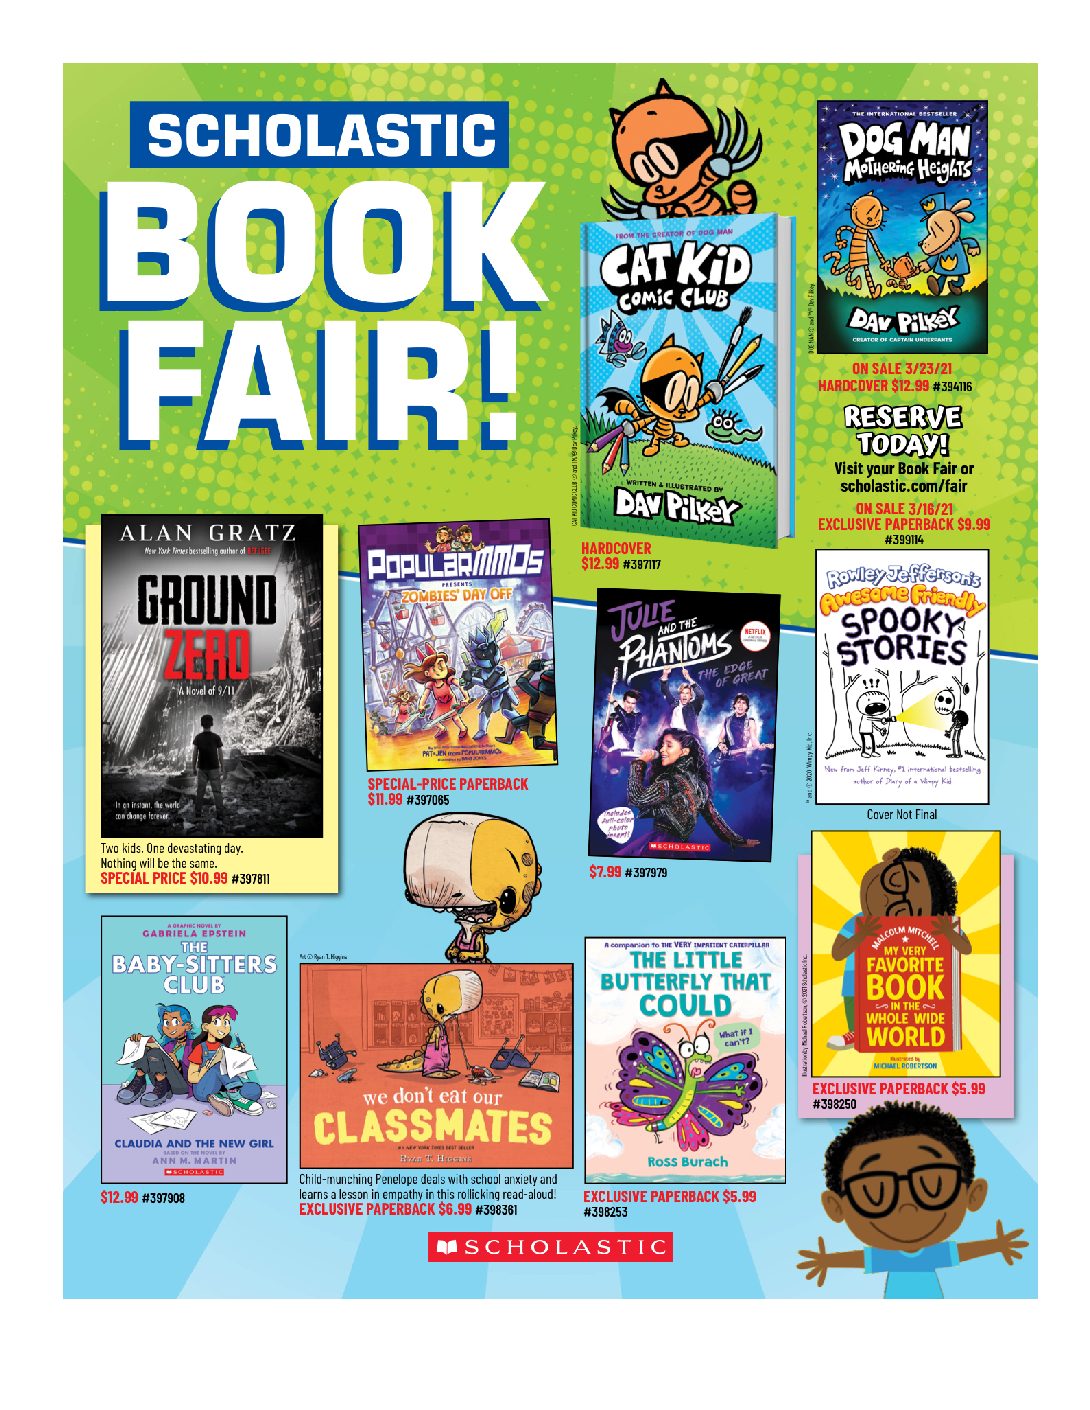 School Conferences & Scholastic Book Fair